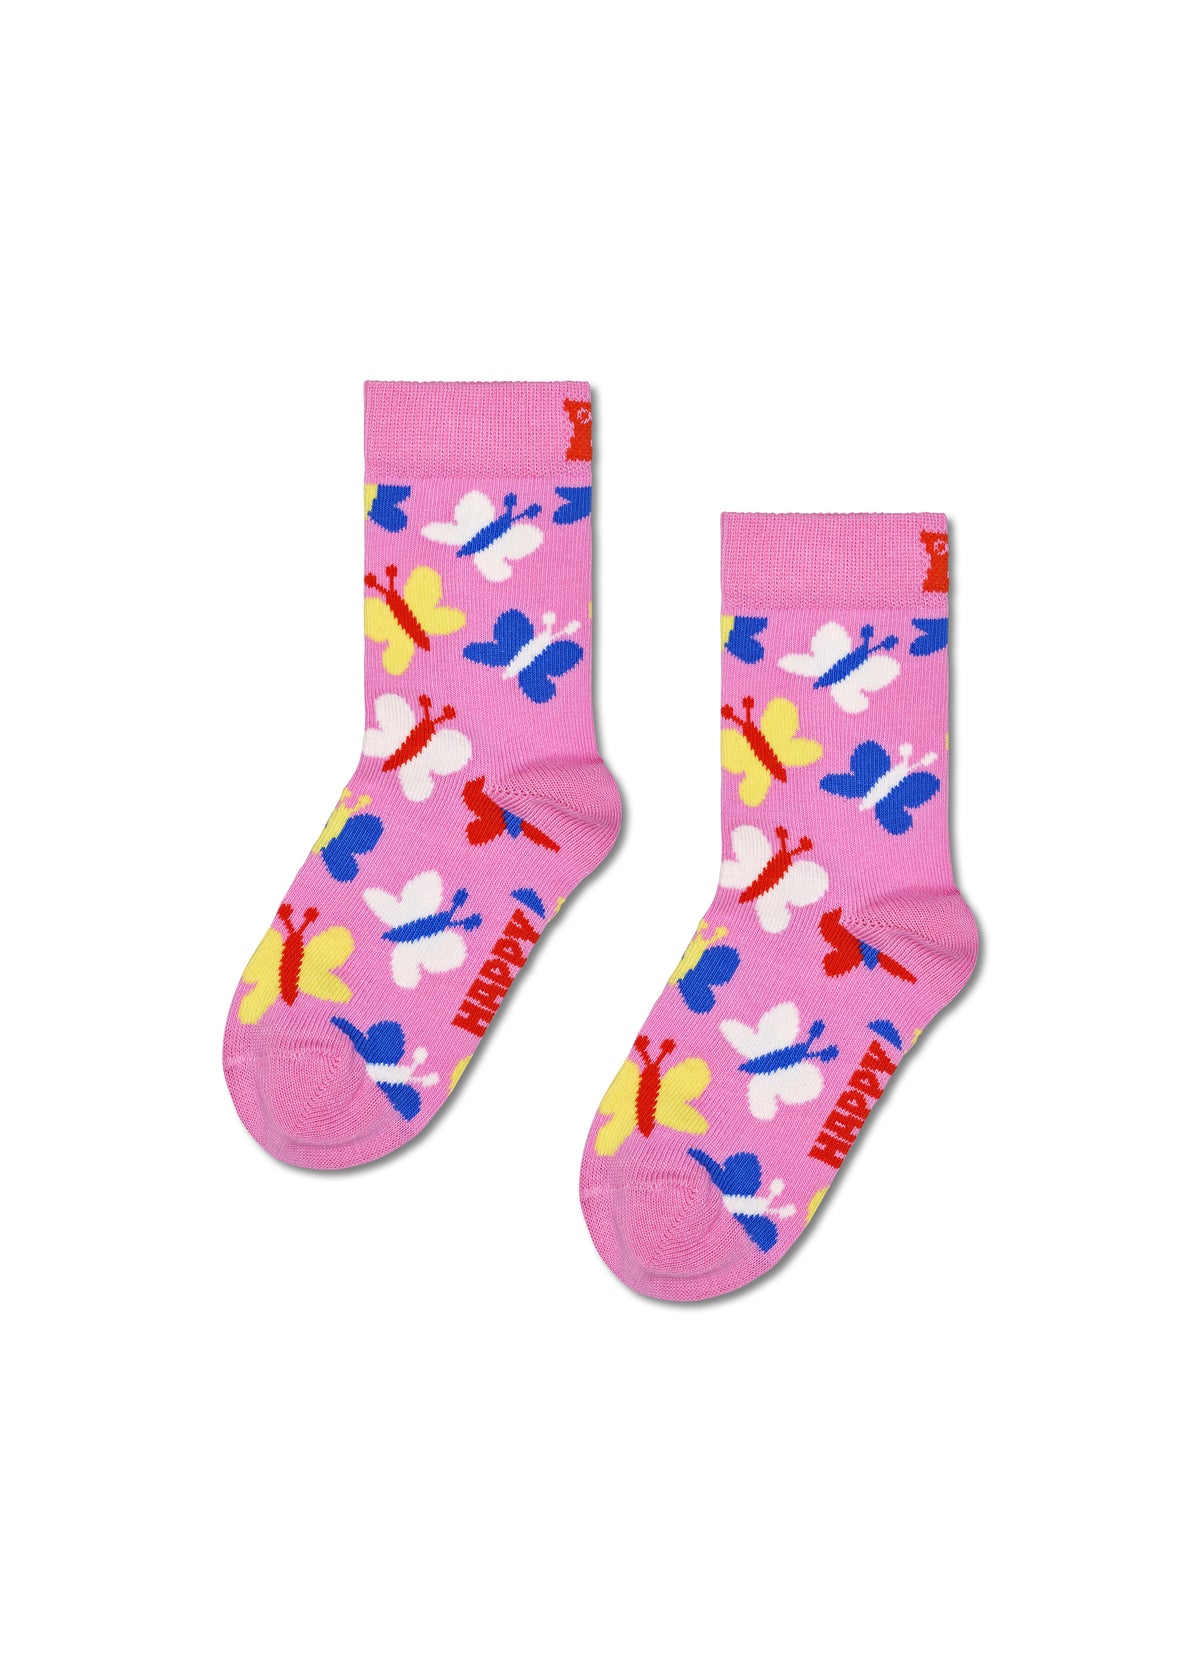 Children's socks - Butterfly Pink